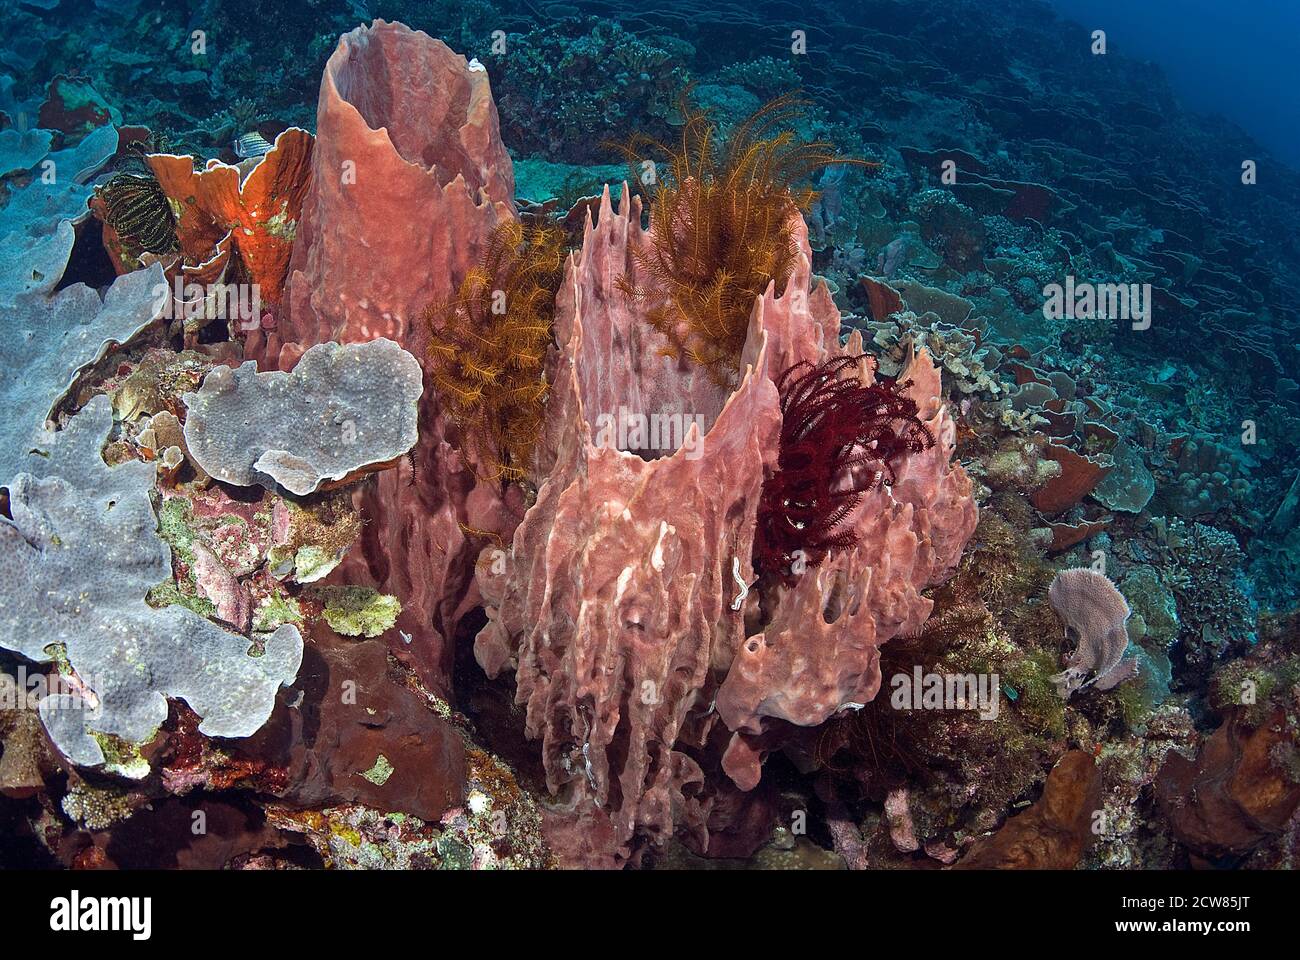 Crinoids (feather stars) and barrel sponges, Sulawesi Indonesia Stock Photo